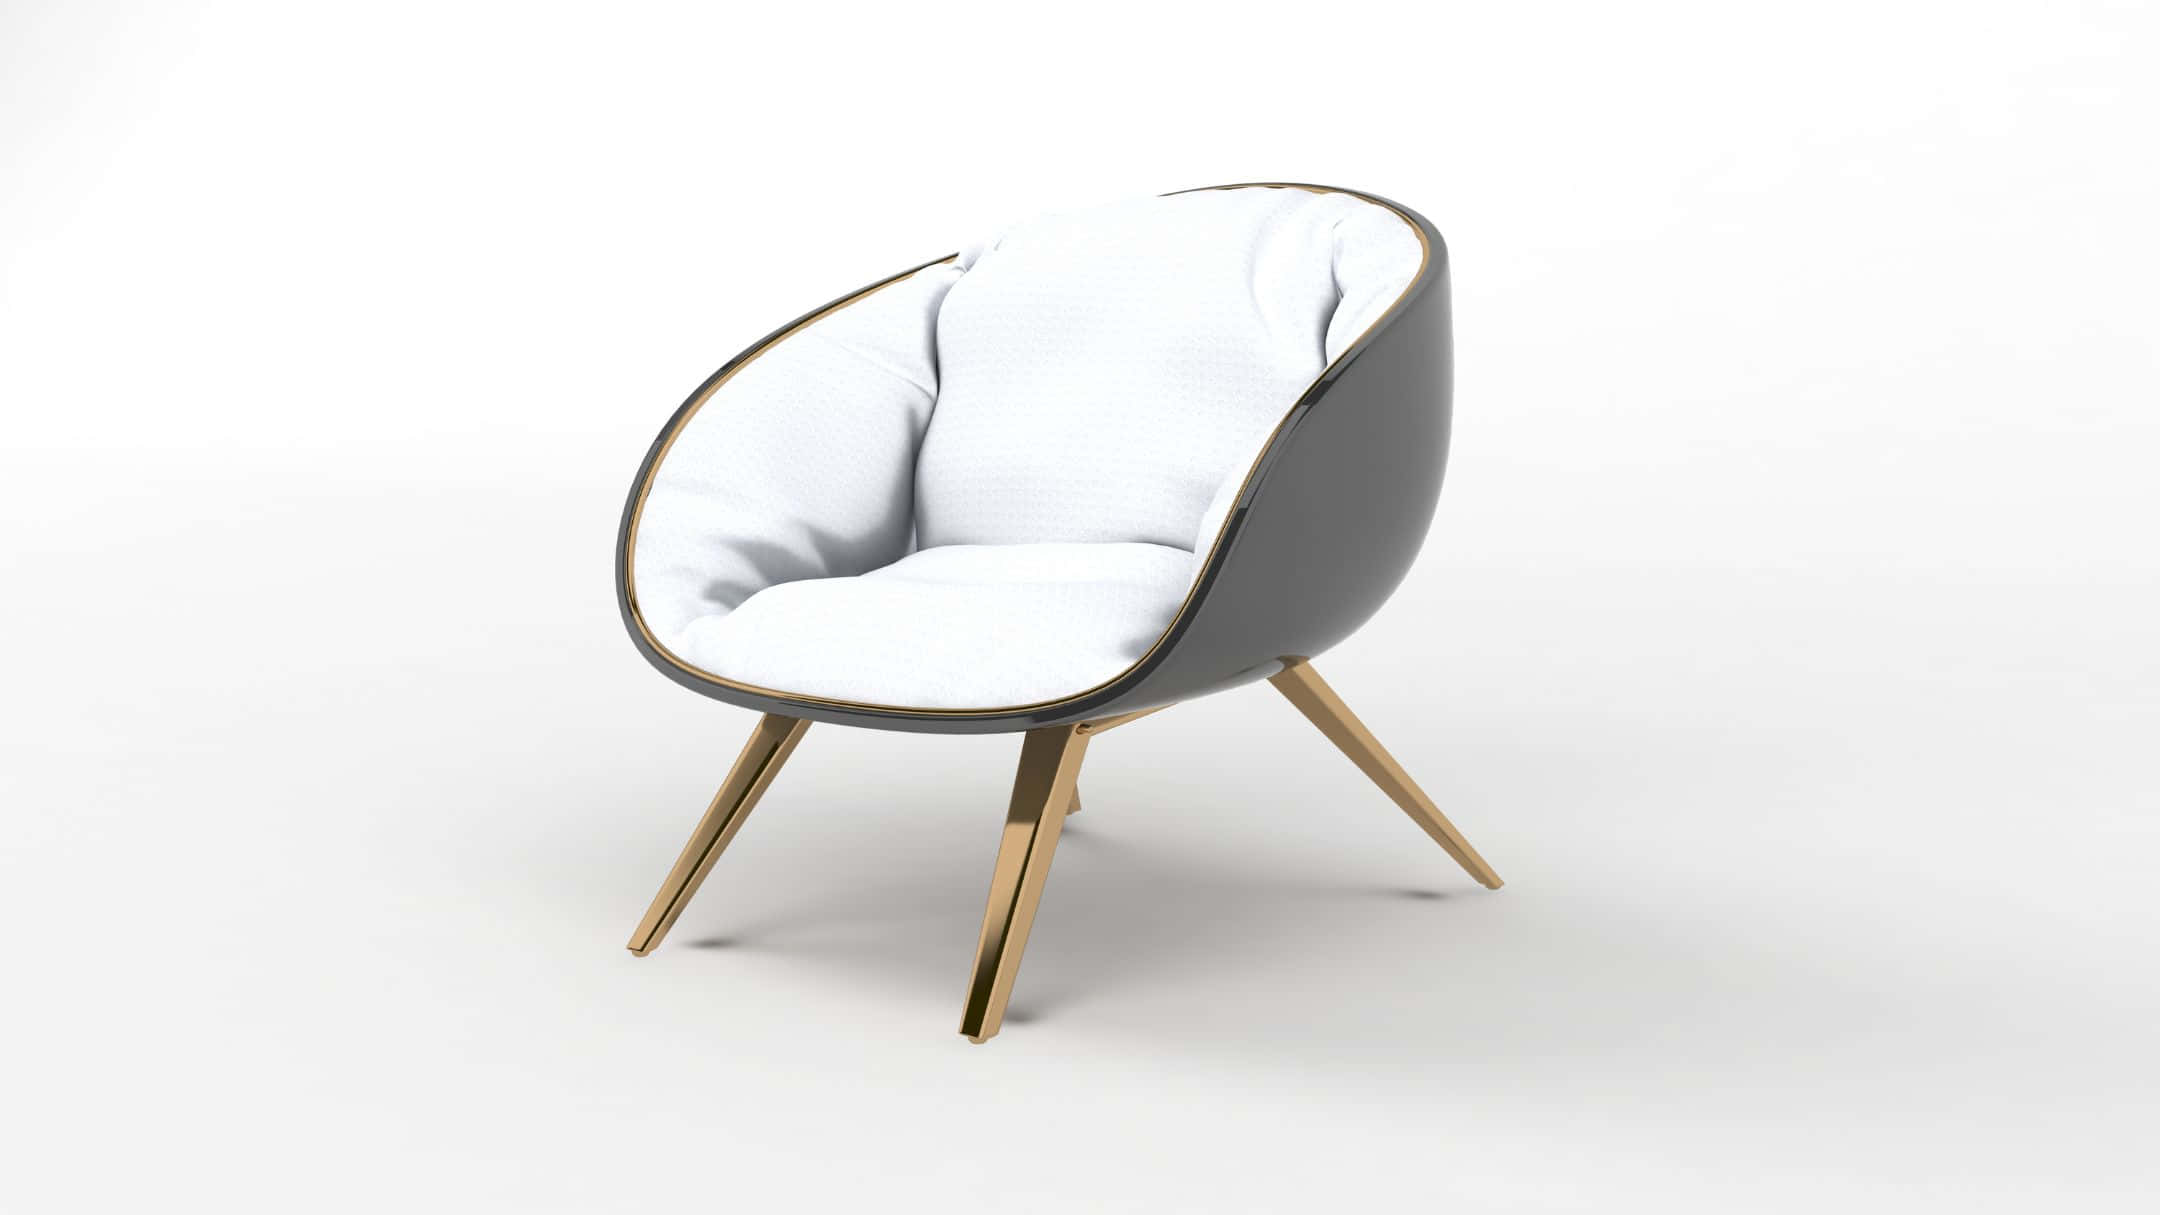 A Modern Chair With A White Cushion And Gold Legs